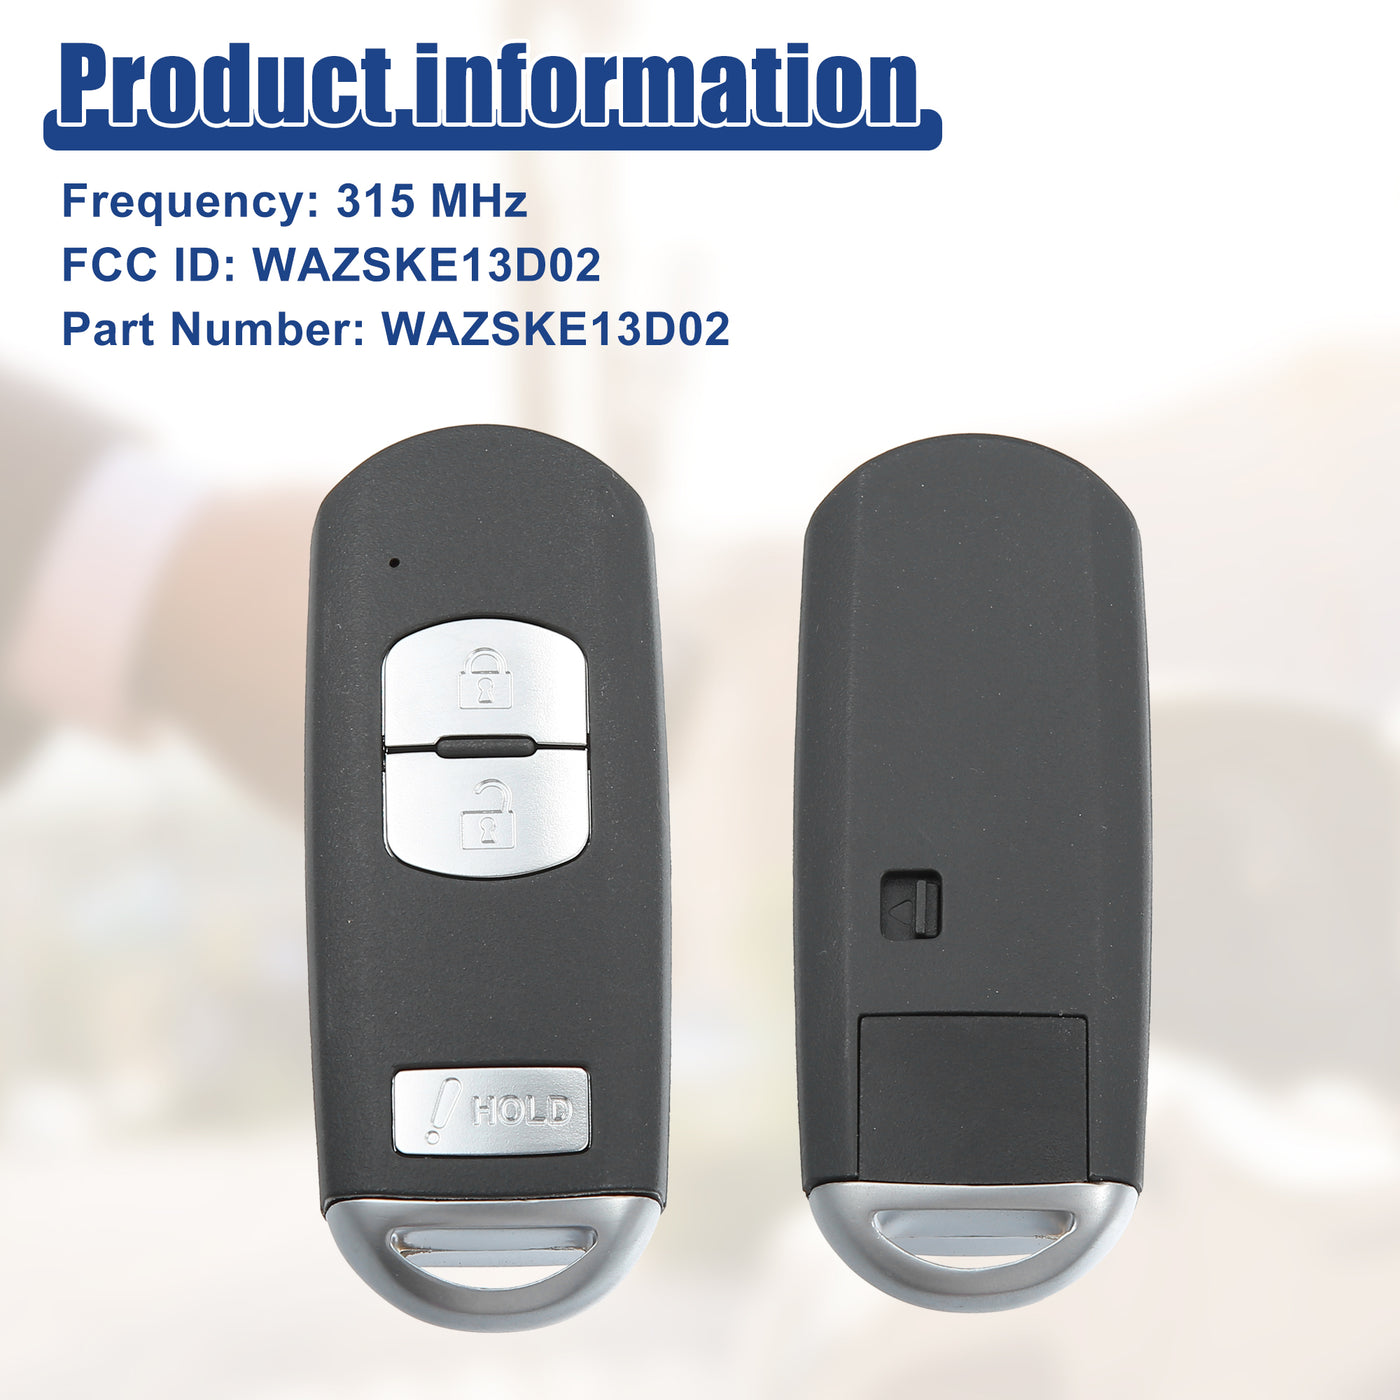 ACROPIX 315 MHz Key Fob Keyless Entry Remote Fit for Mazda CX-5 2018 for Mazda CX-9 2018-2019 for Mazda CX-3 2018-2019 WAZSKE13D02 - Pack of 1 Black